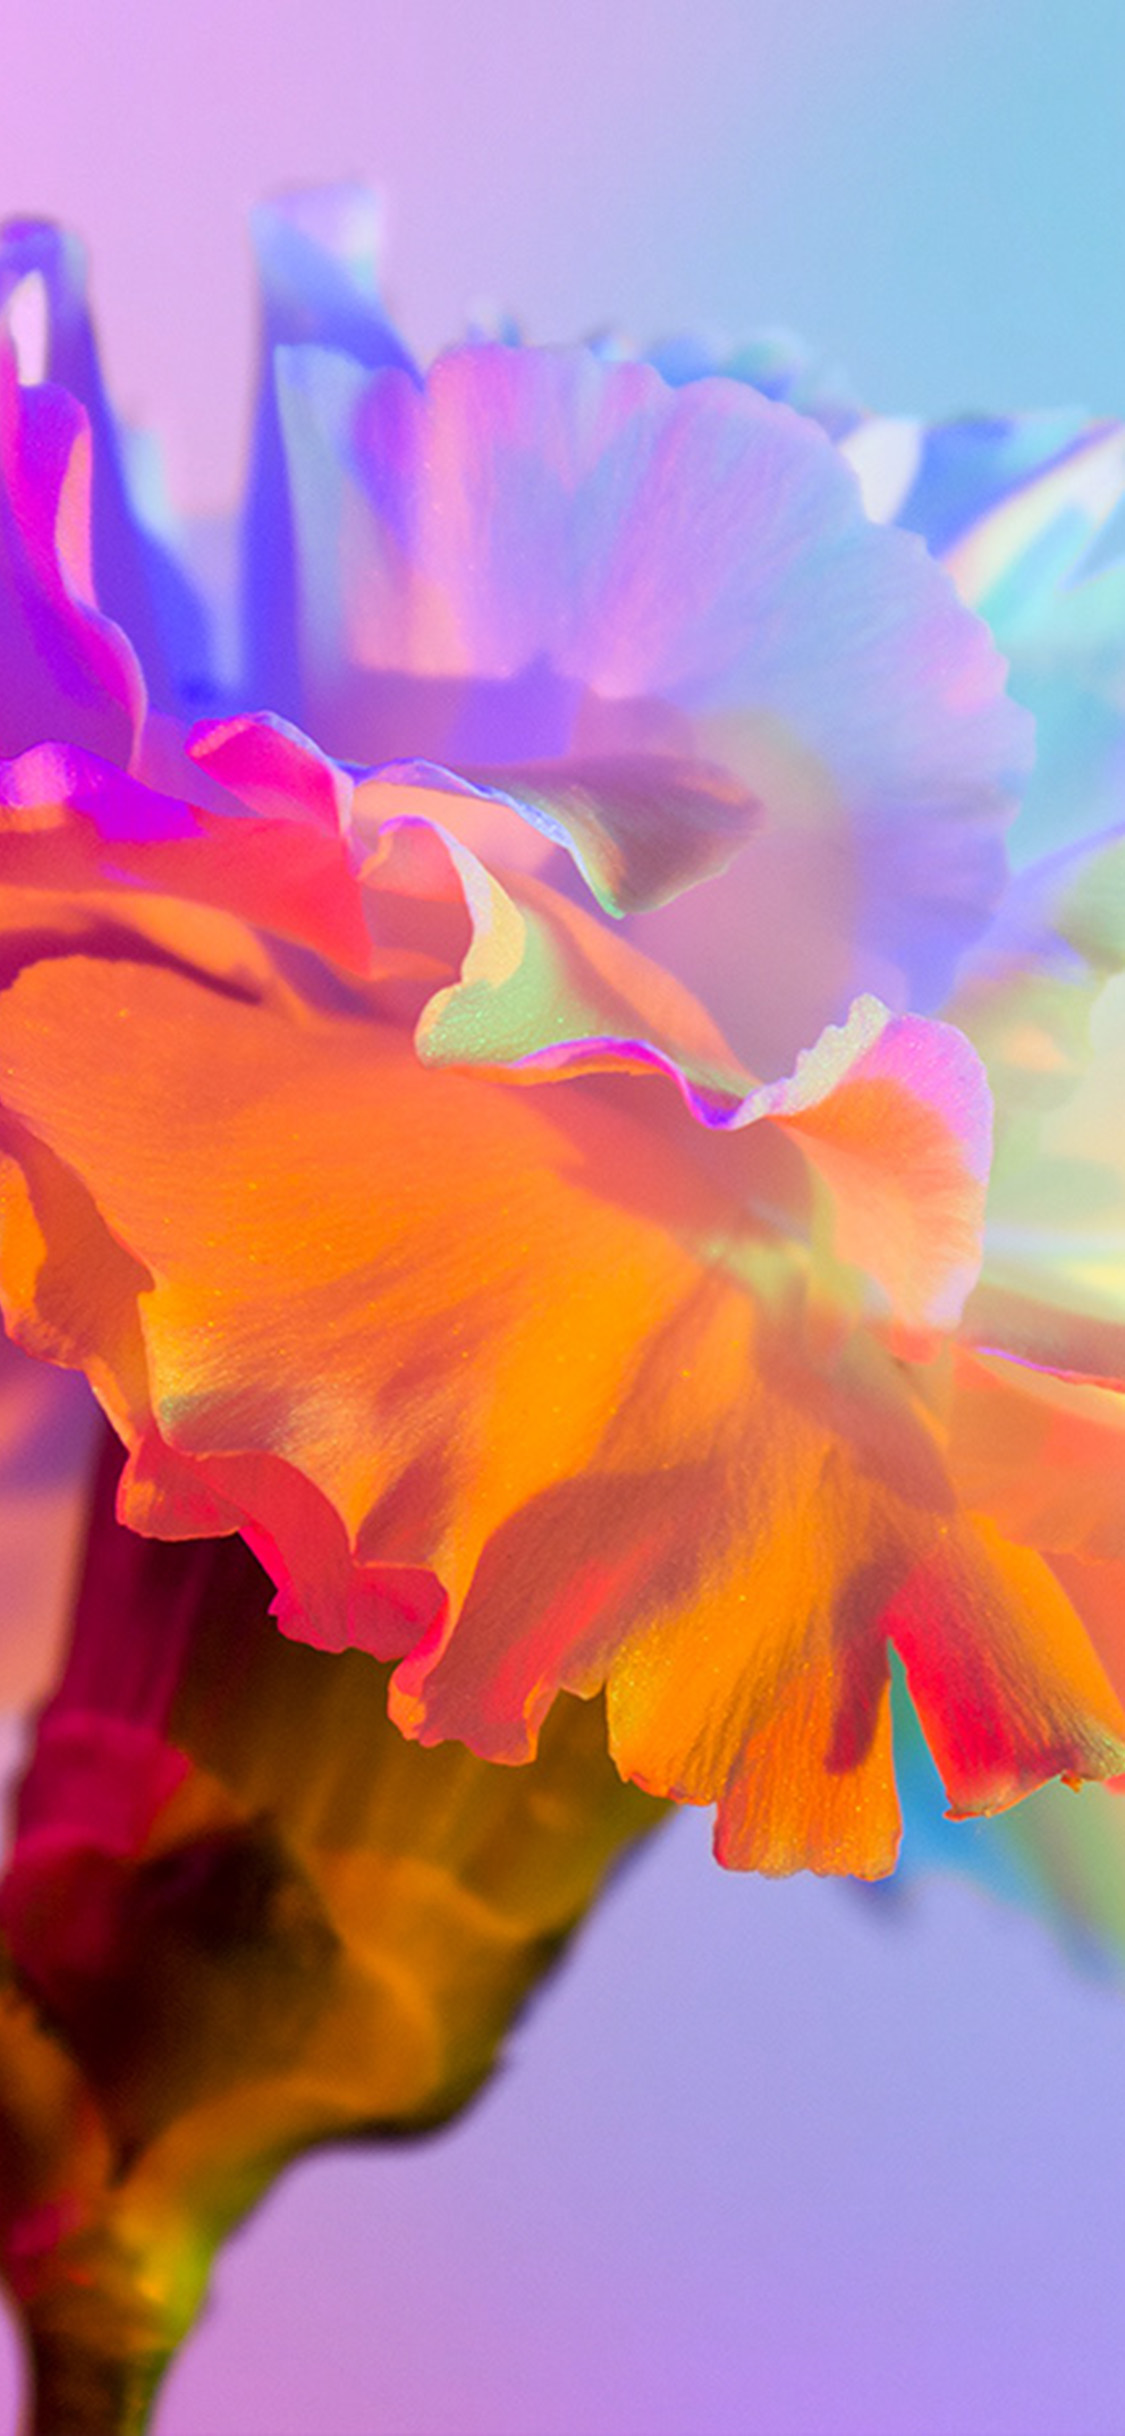 iPhone X wallpaper. art spring flower rainbow